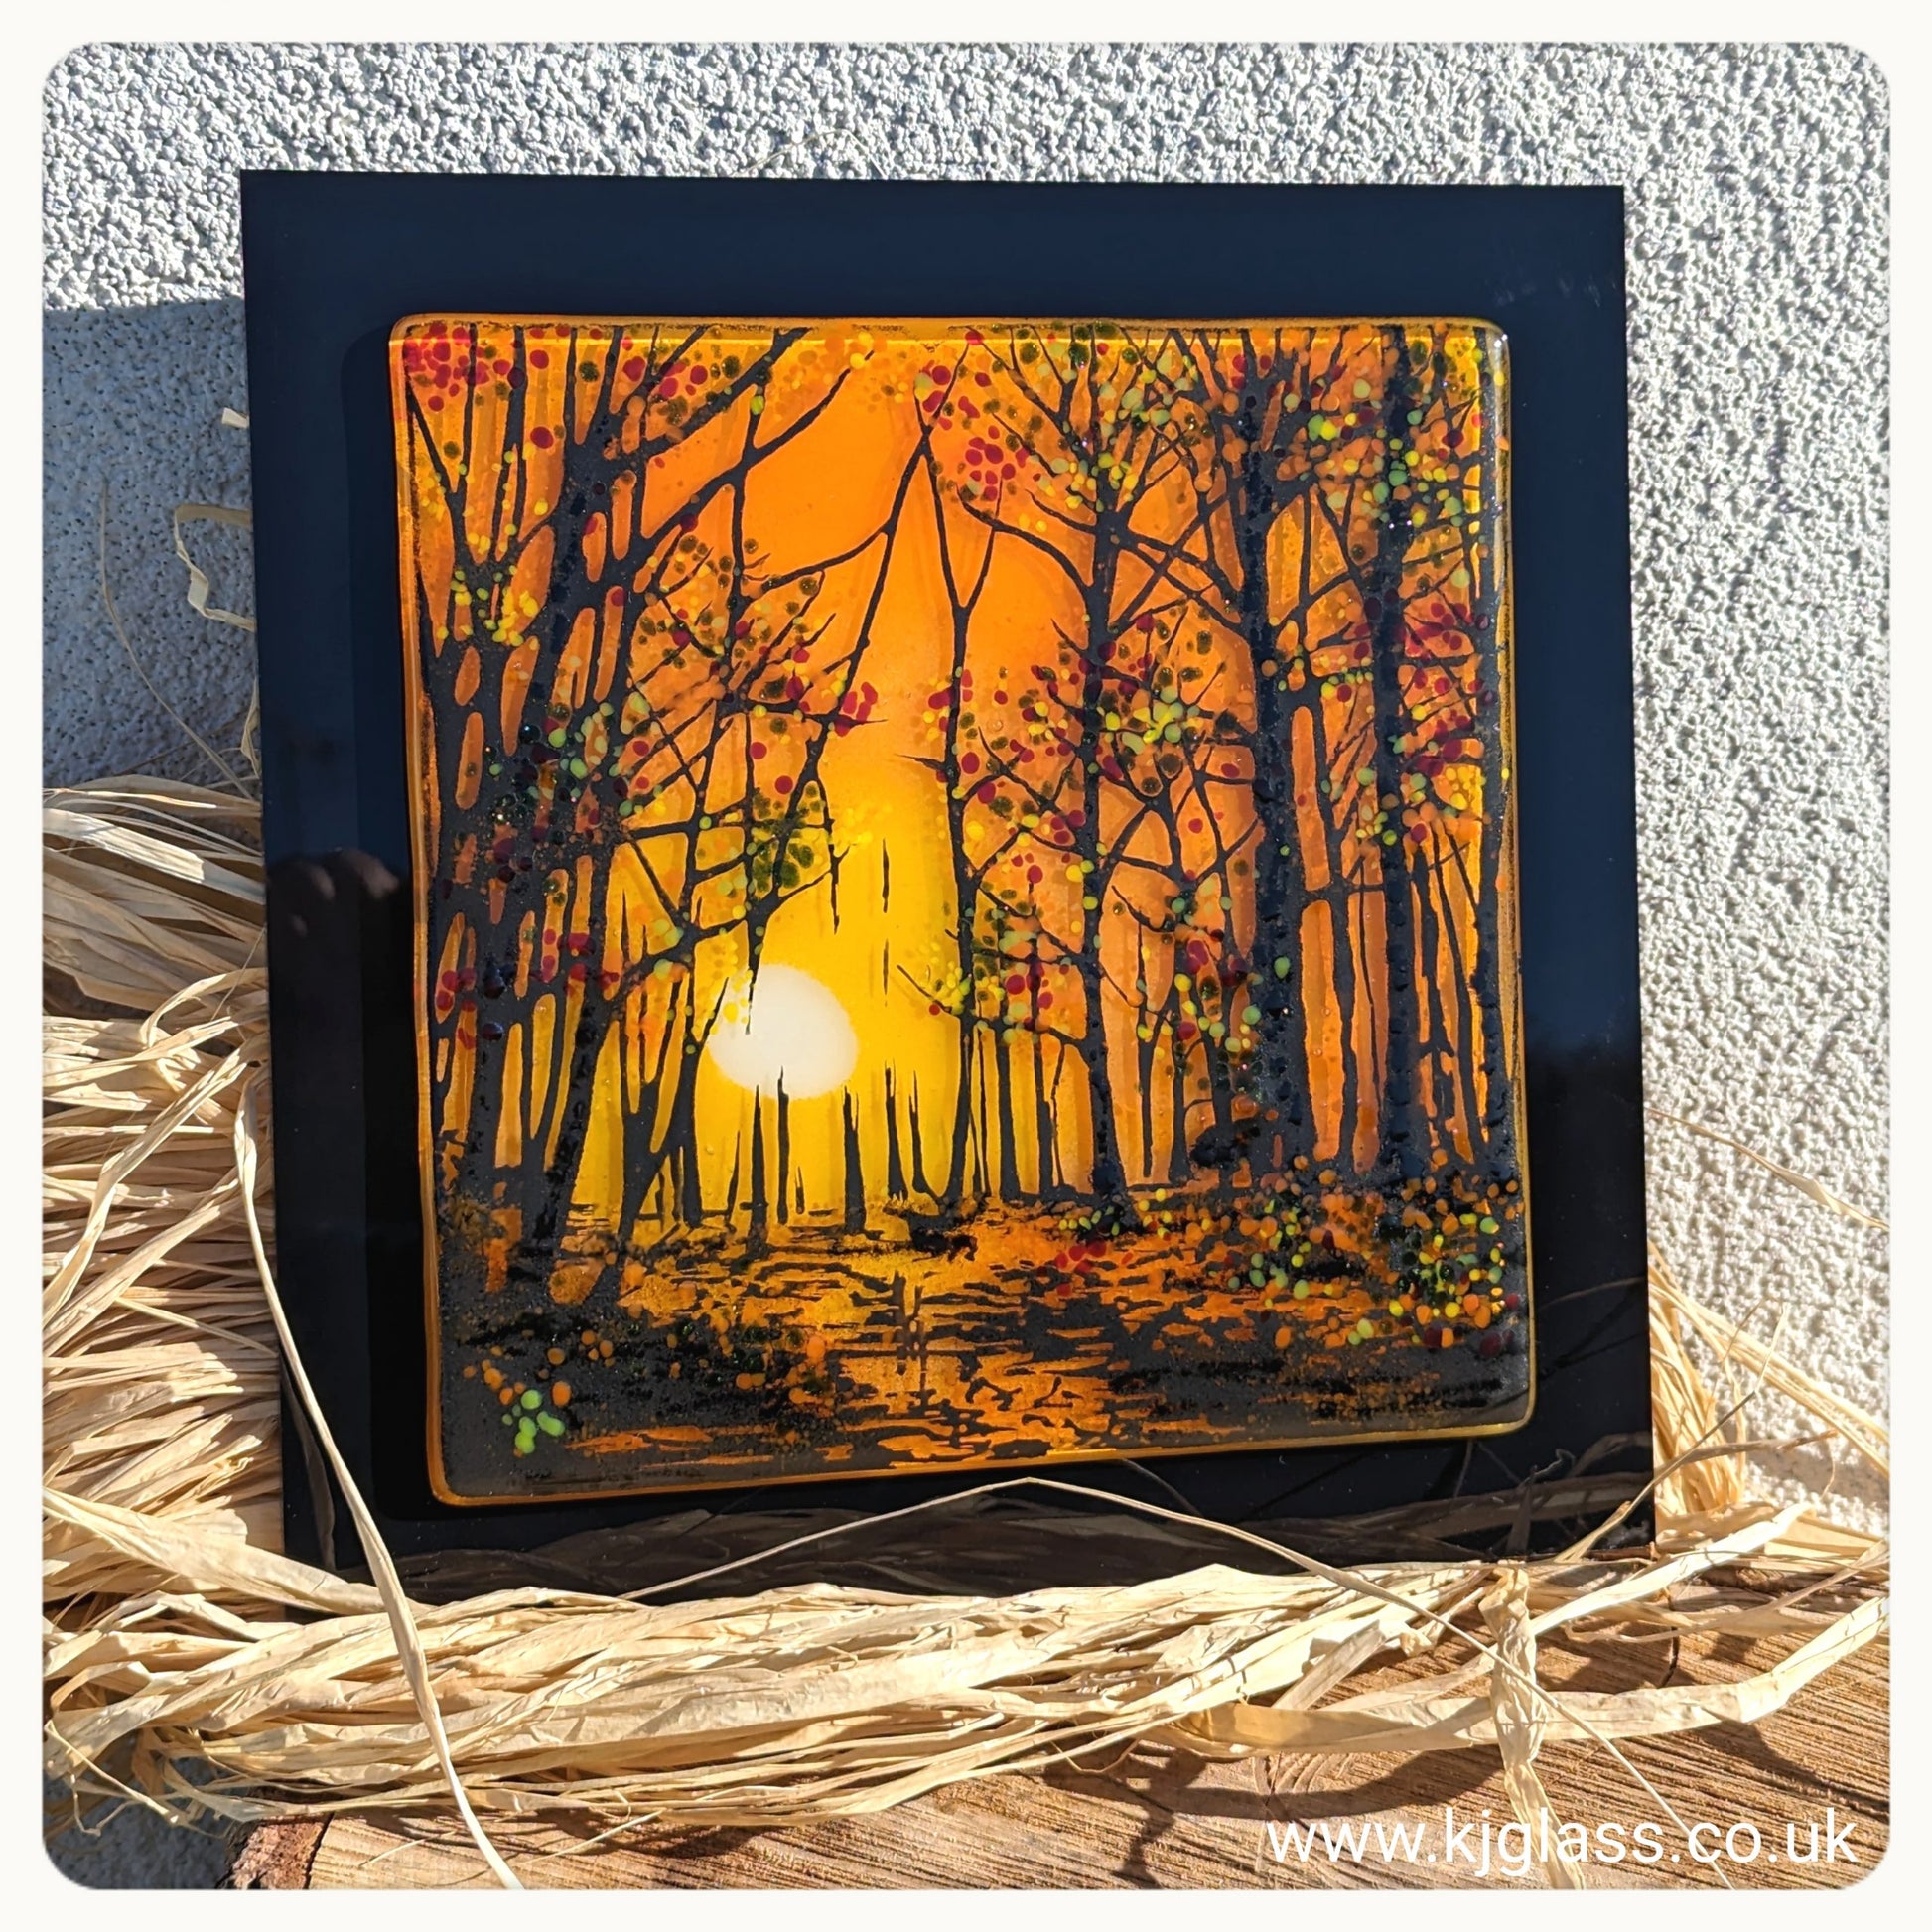 Autumn tree design, fused glass art on a polished black backing board